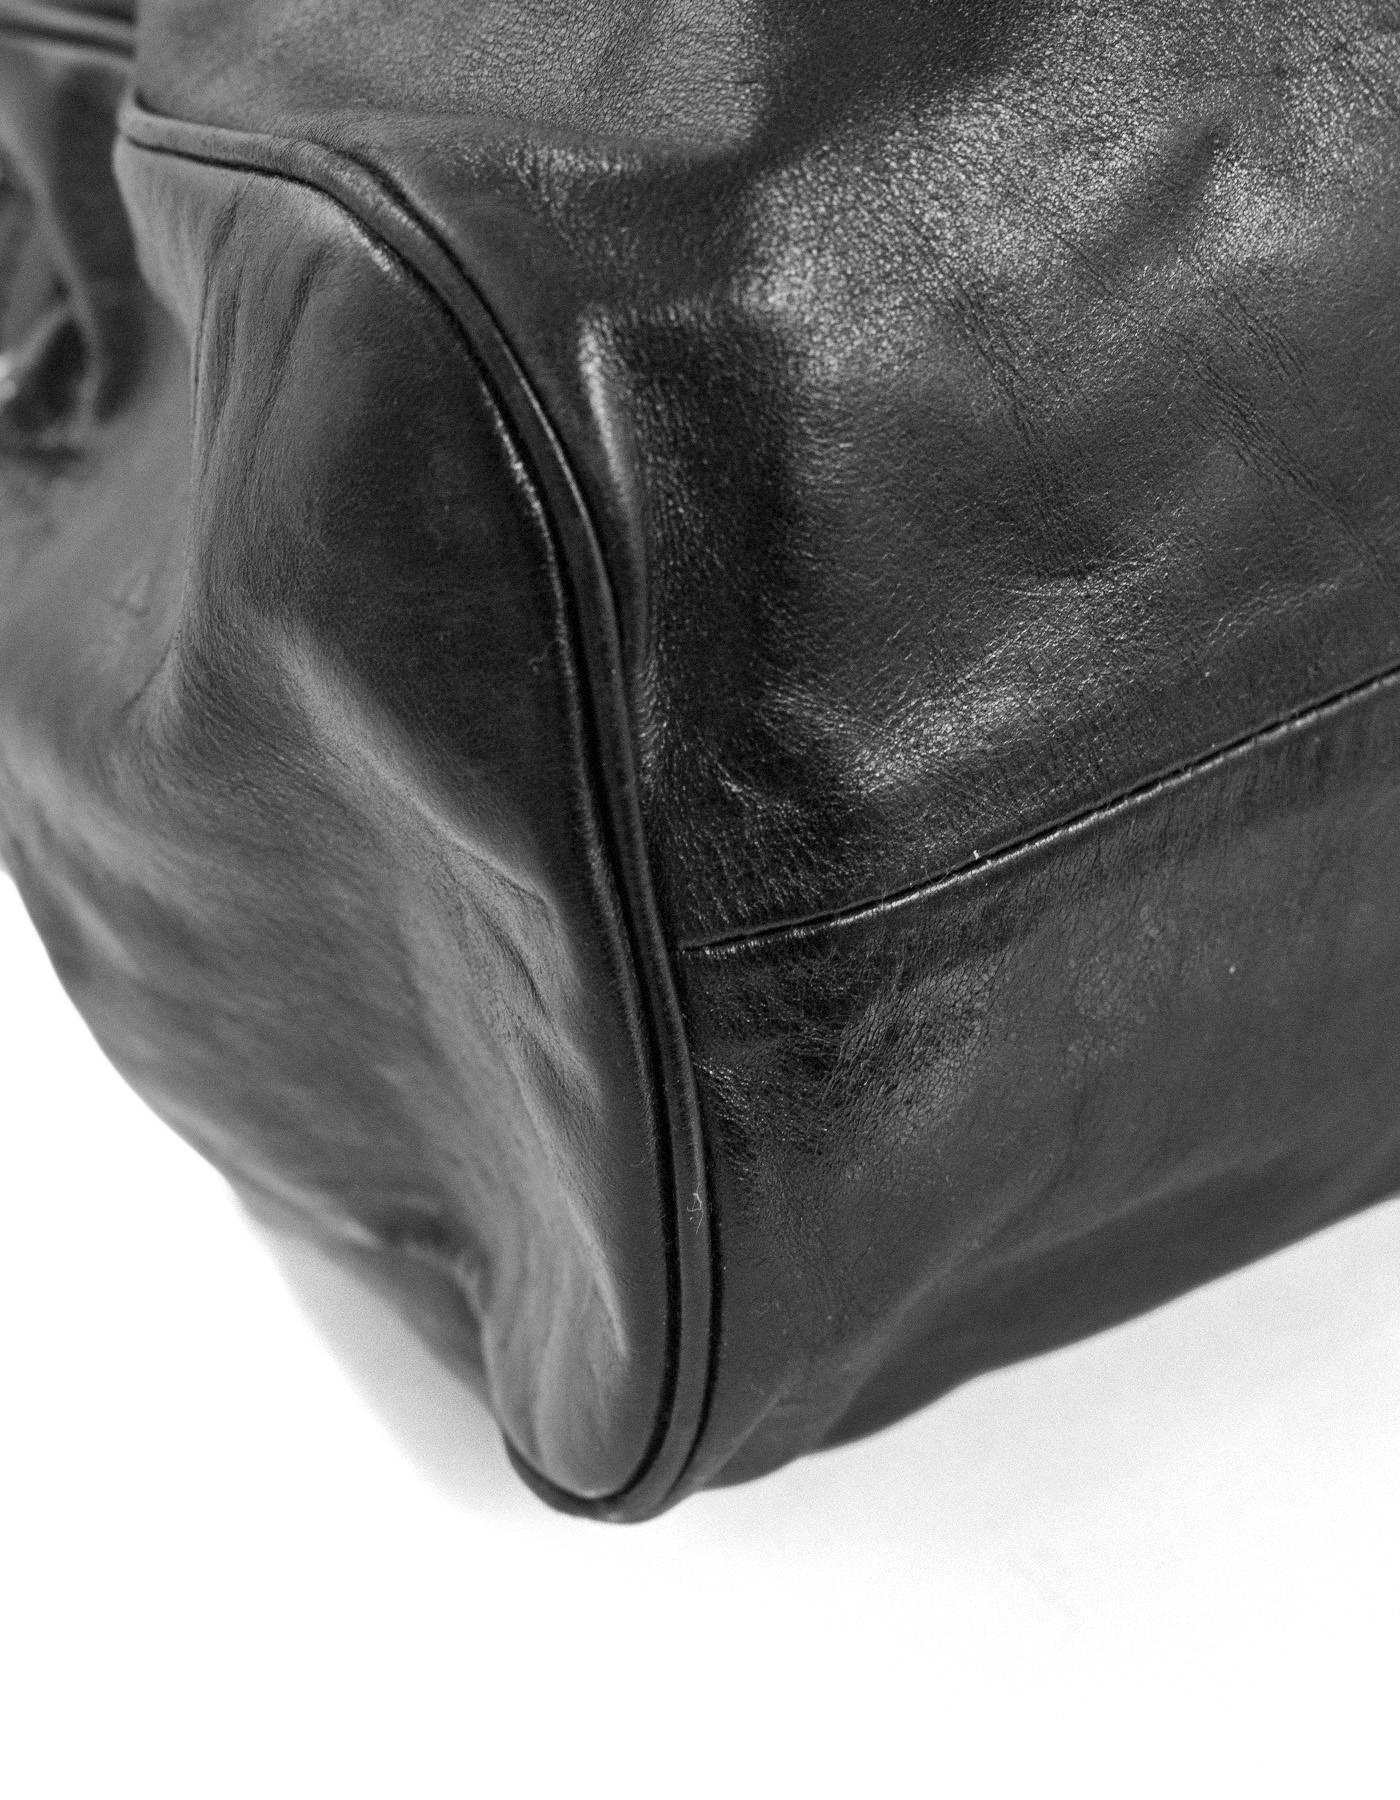 jimmy choo black leather purse